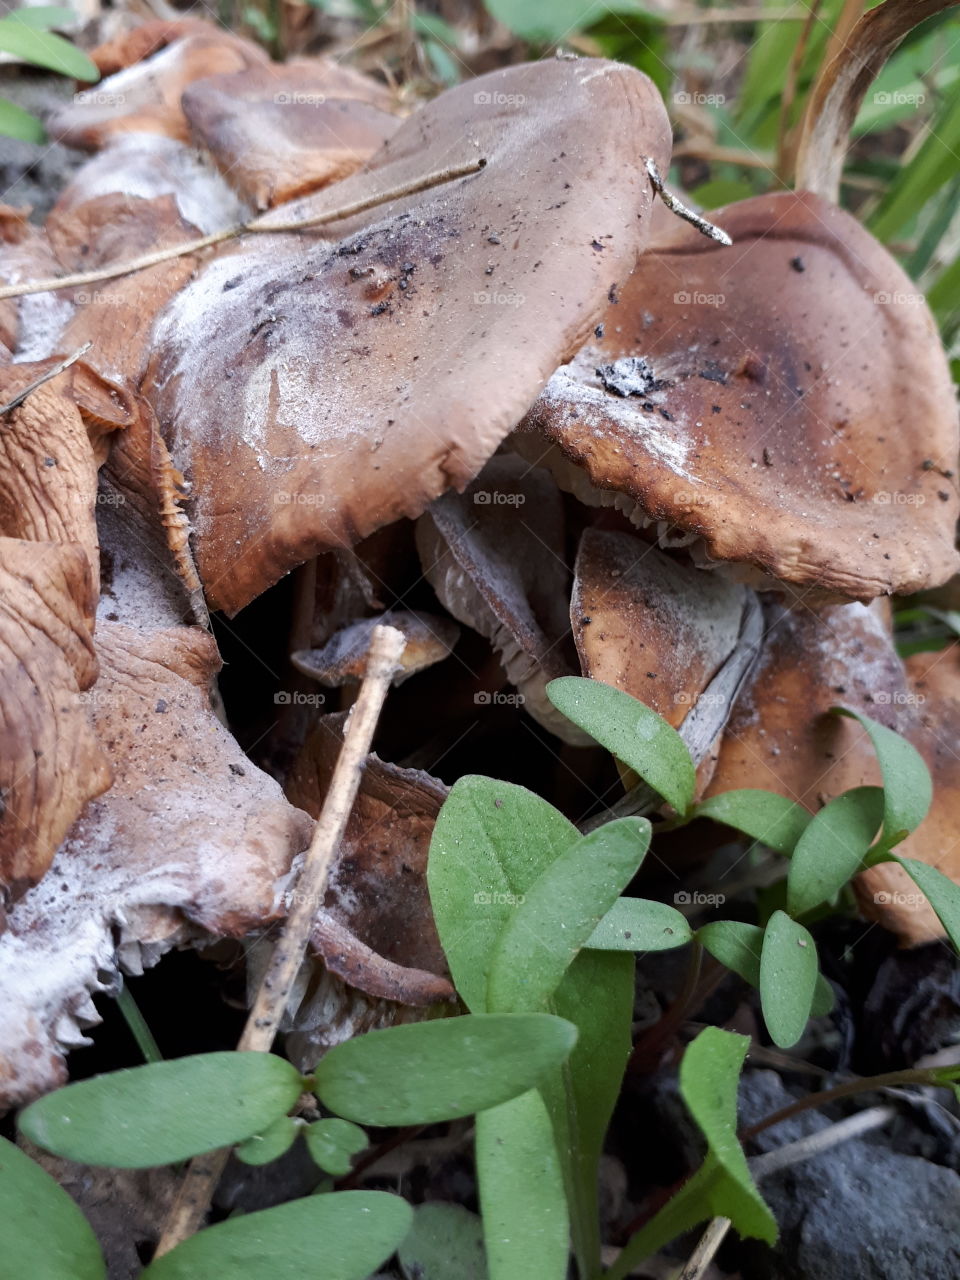 Mushroom caps growing amongst chickweed